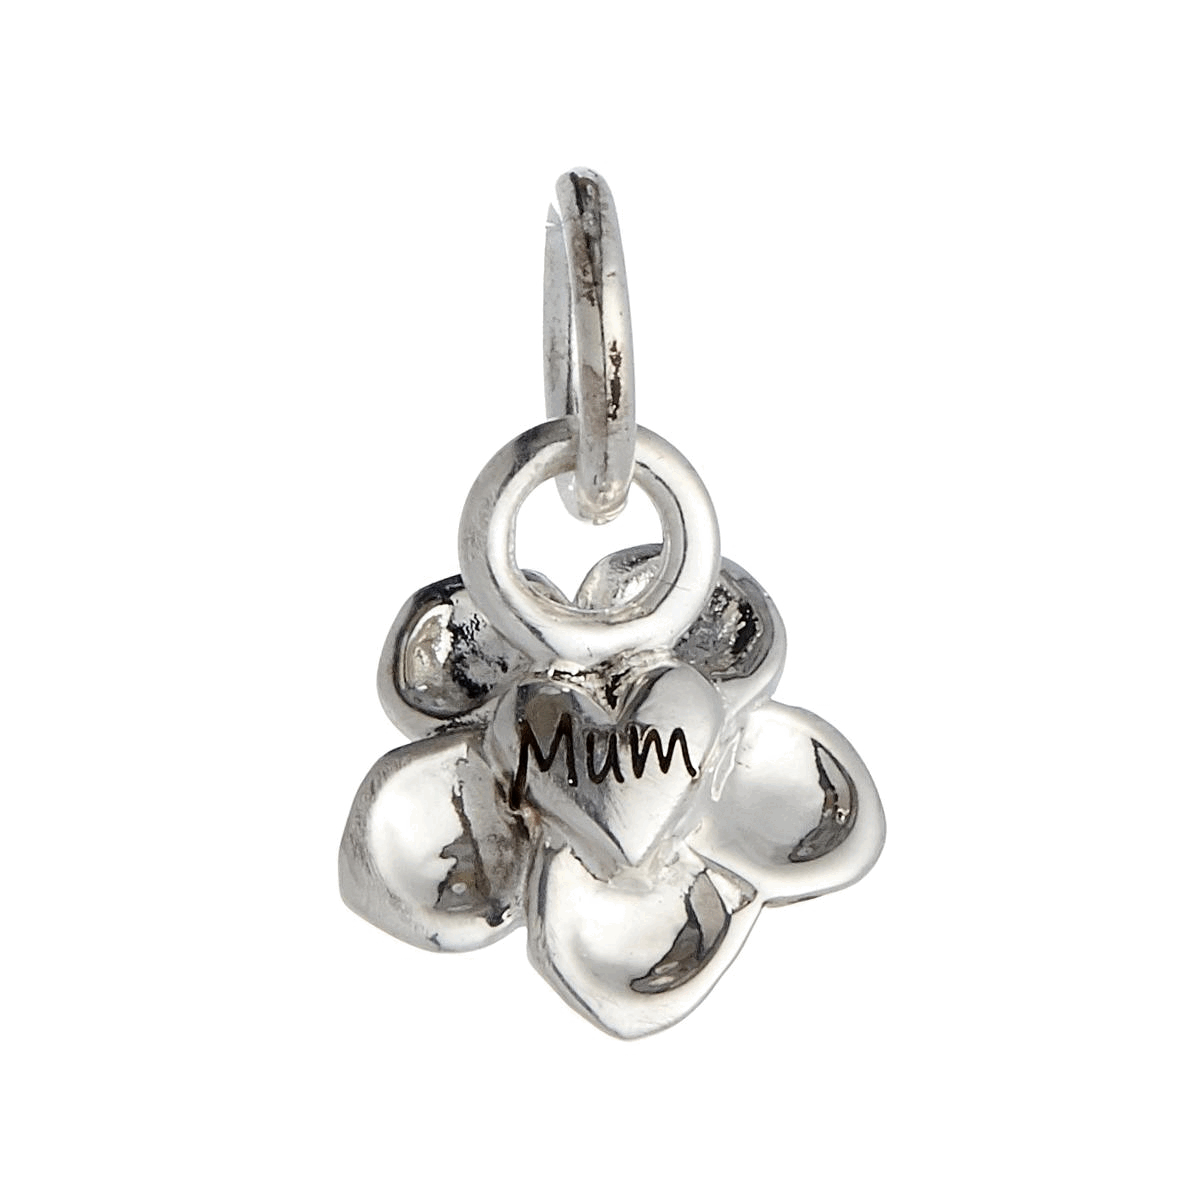 Forget-Me-Not Flower Silver Charm Scarlett Jewellery